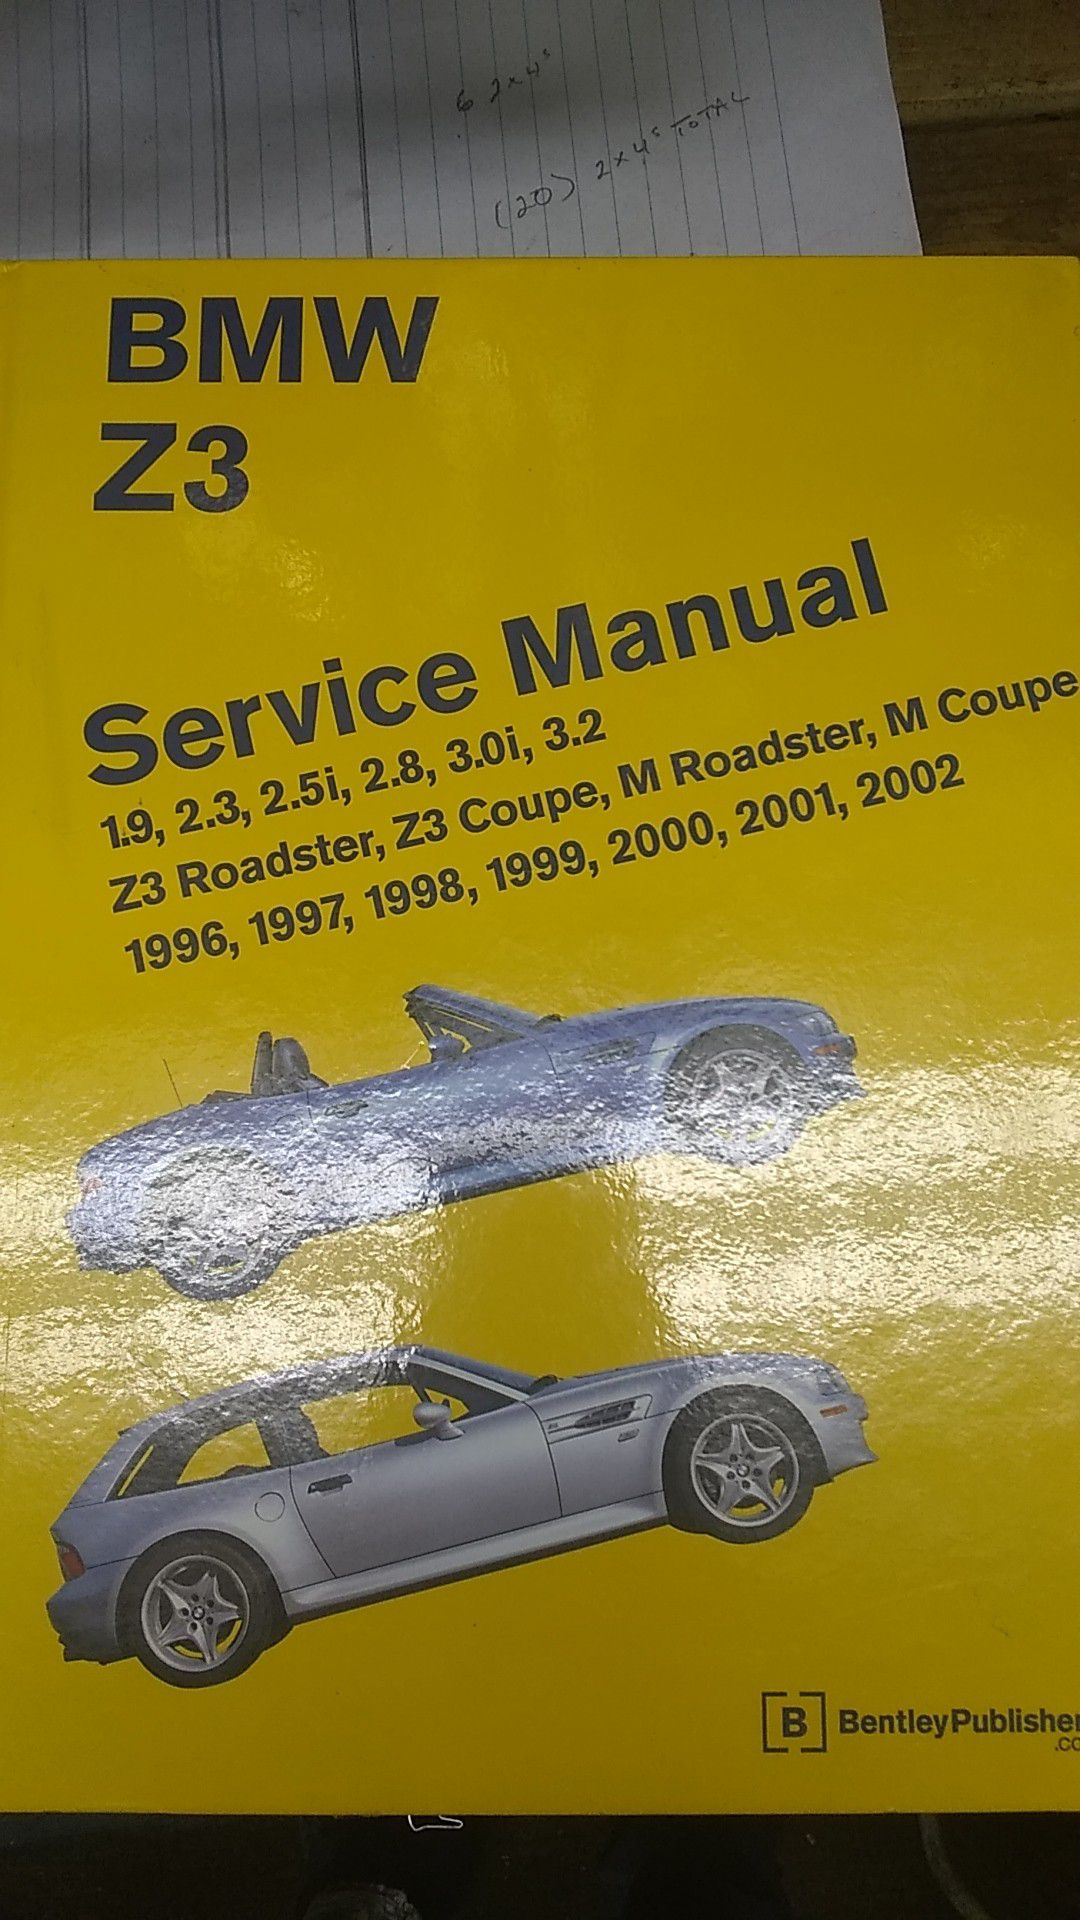 Bentley service manual